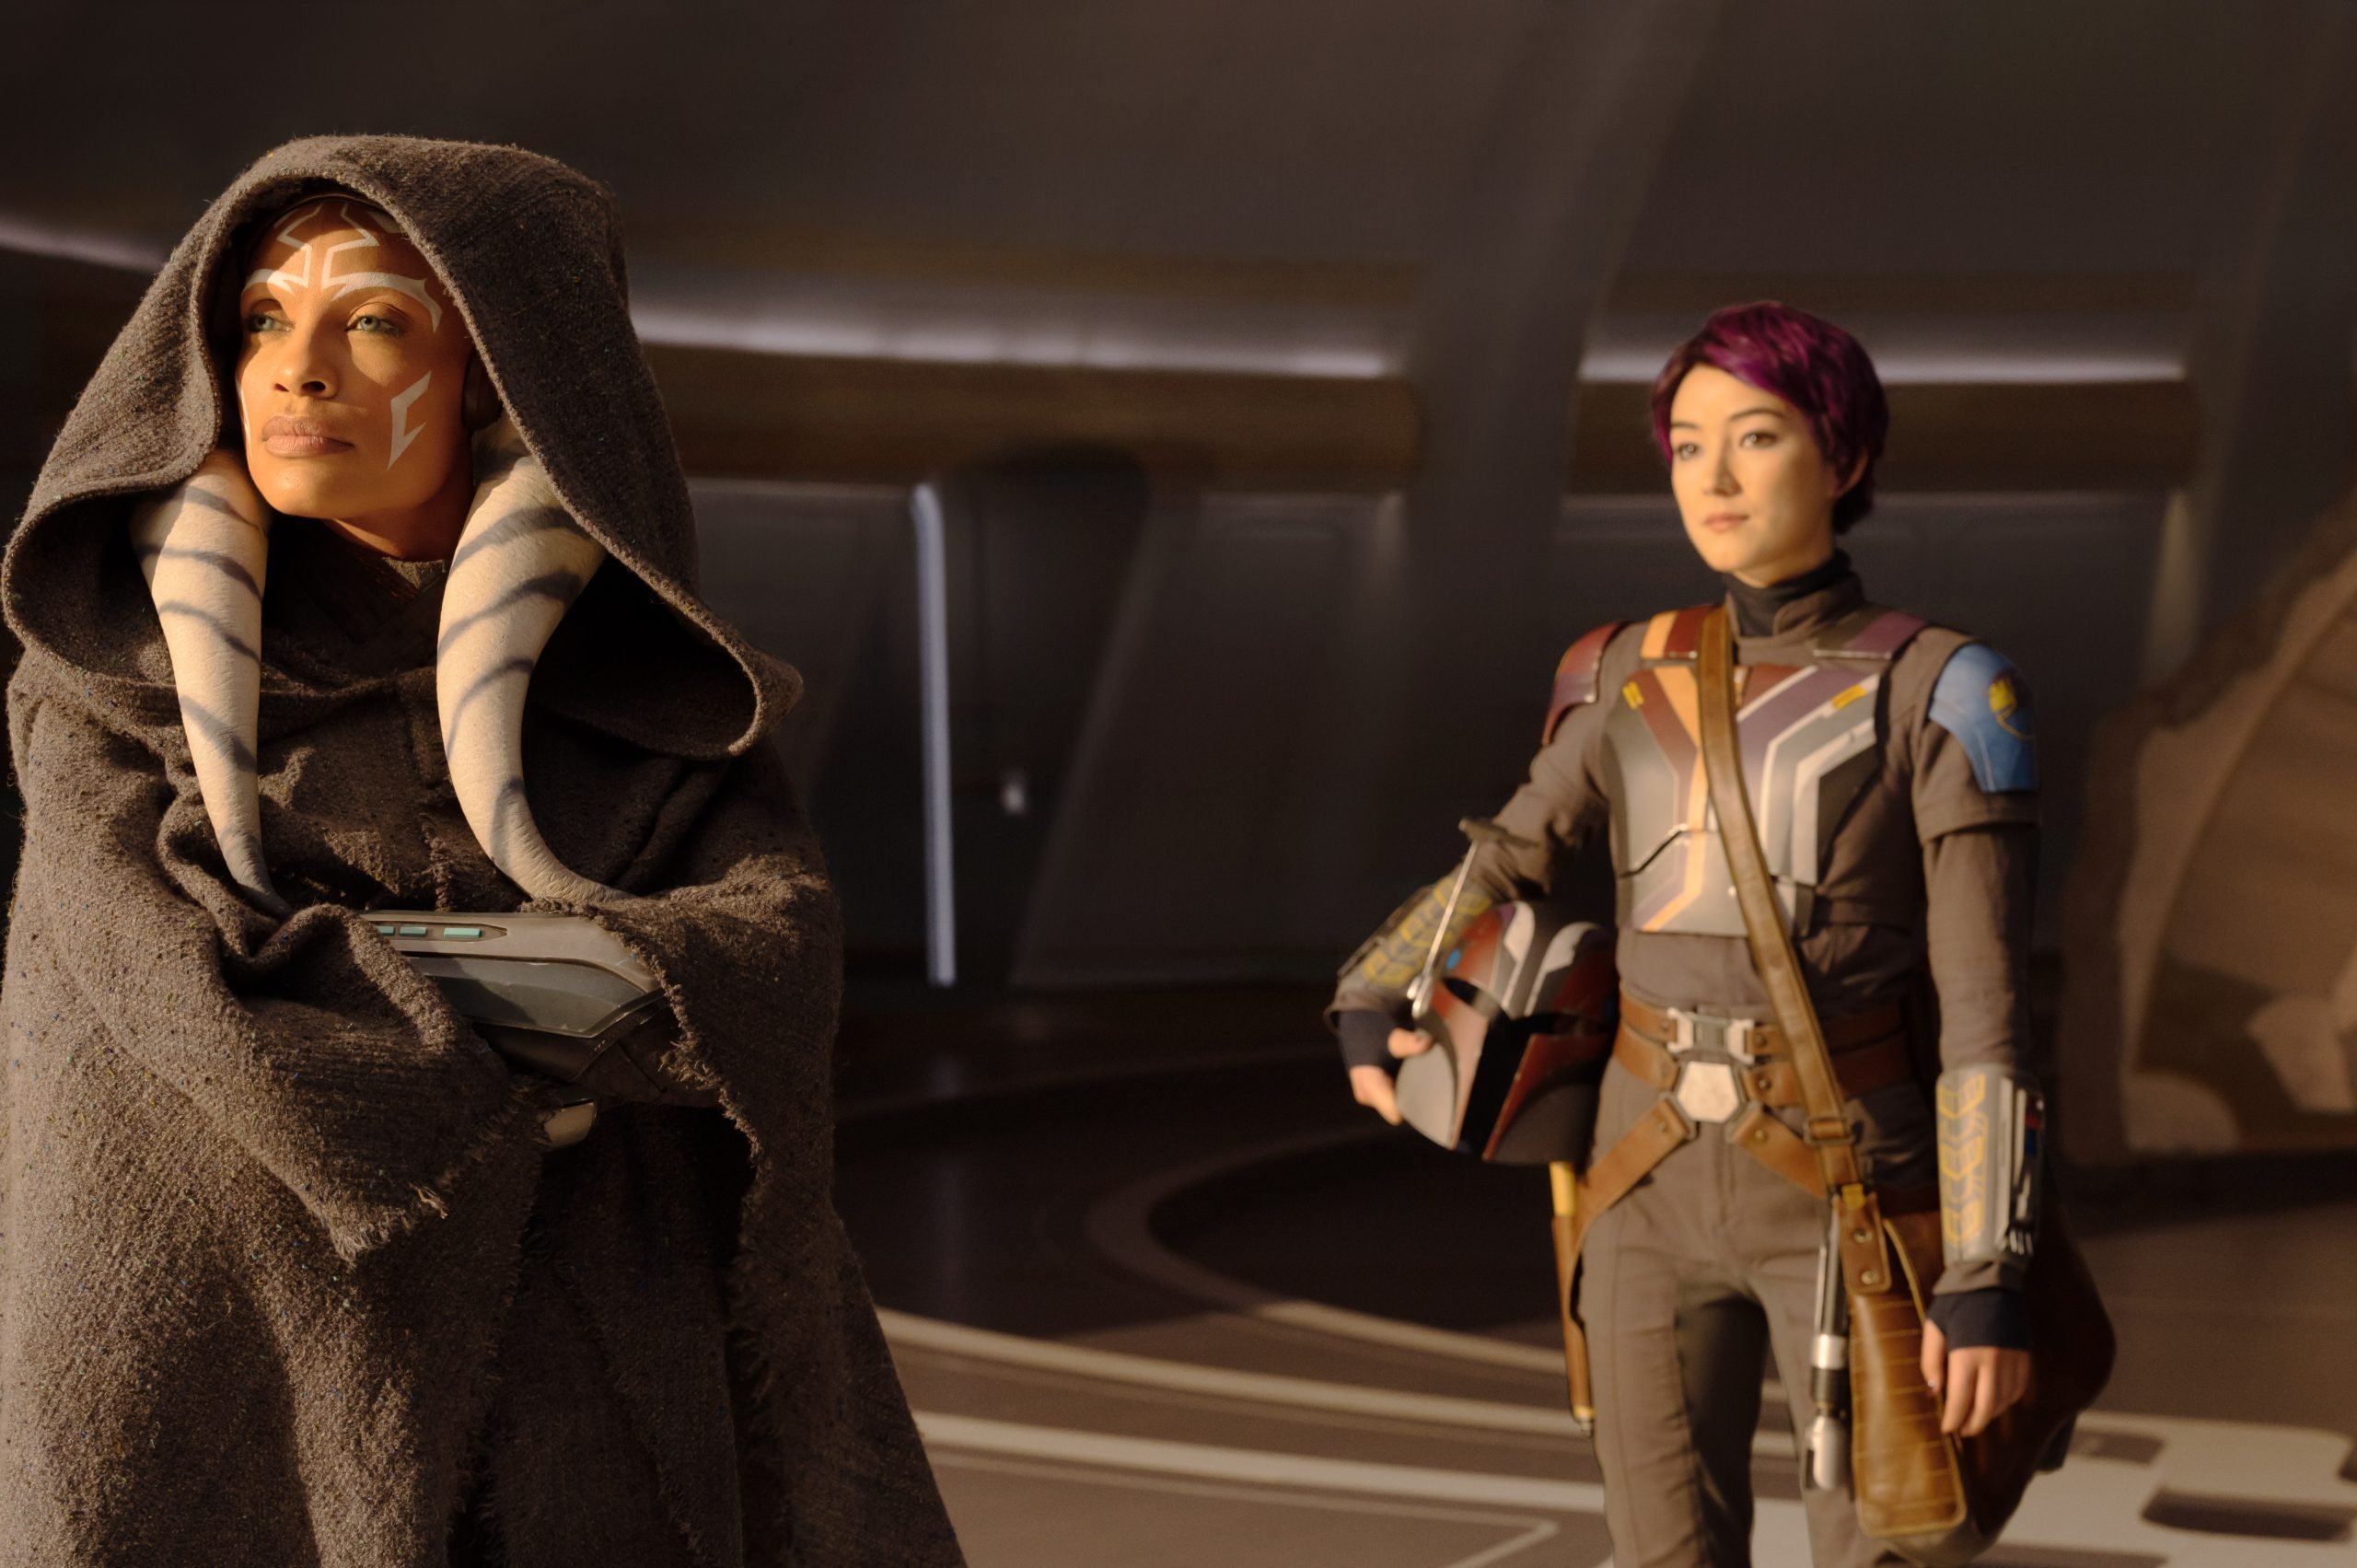 Ahsoka' One Week Away, Three New Spots Revealed - Star Wars News Net